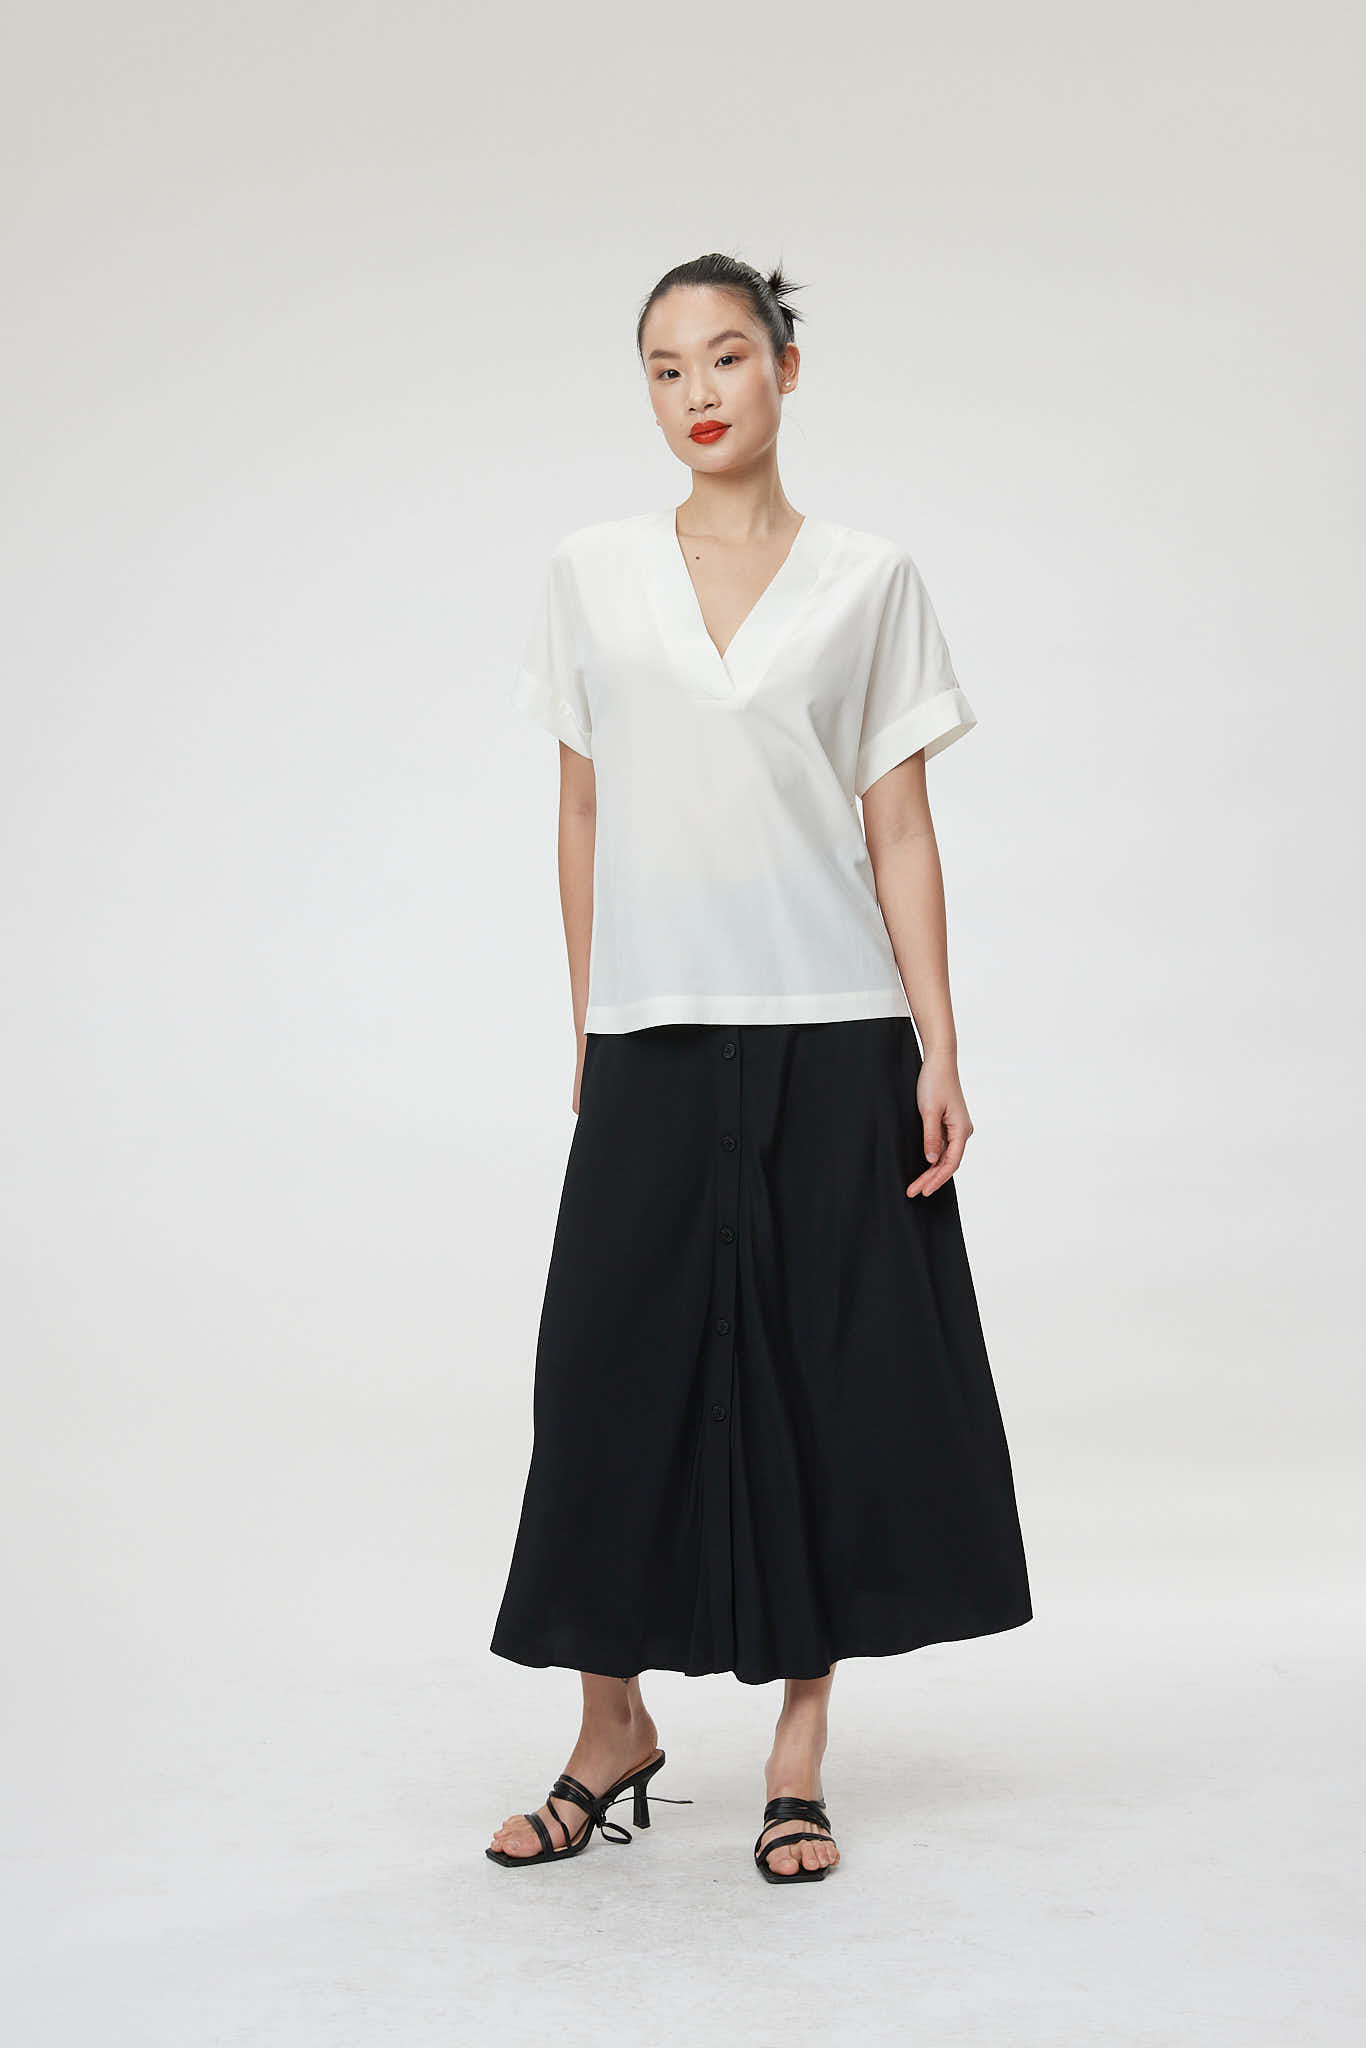 Lecce Blouse – V-neck blouse in white0